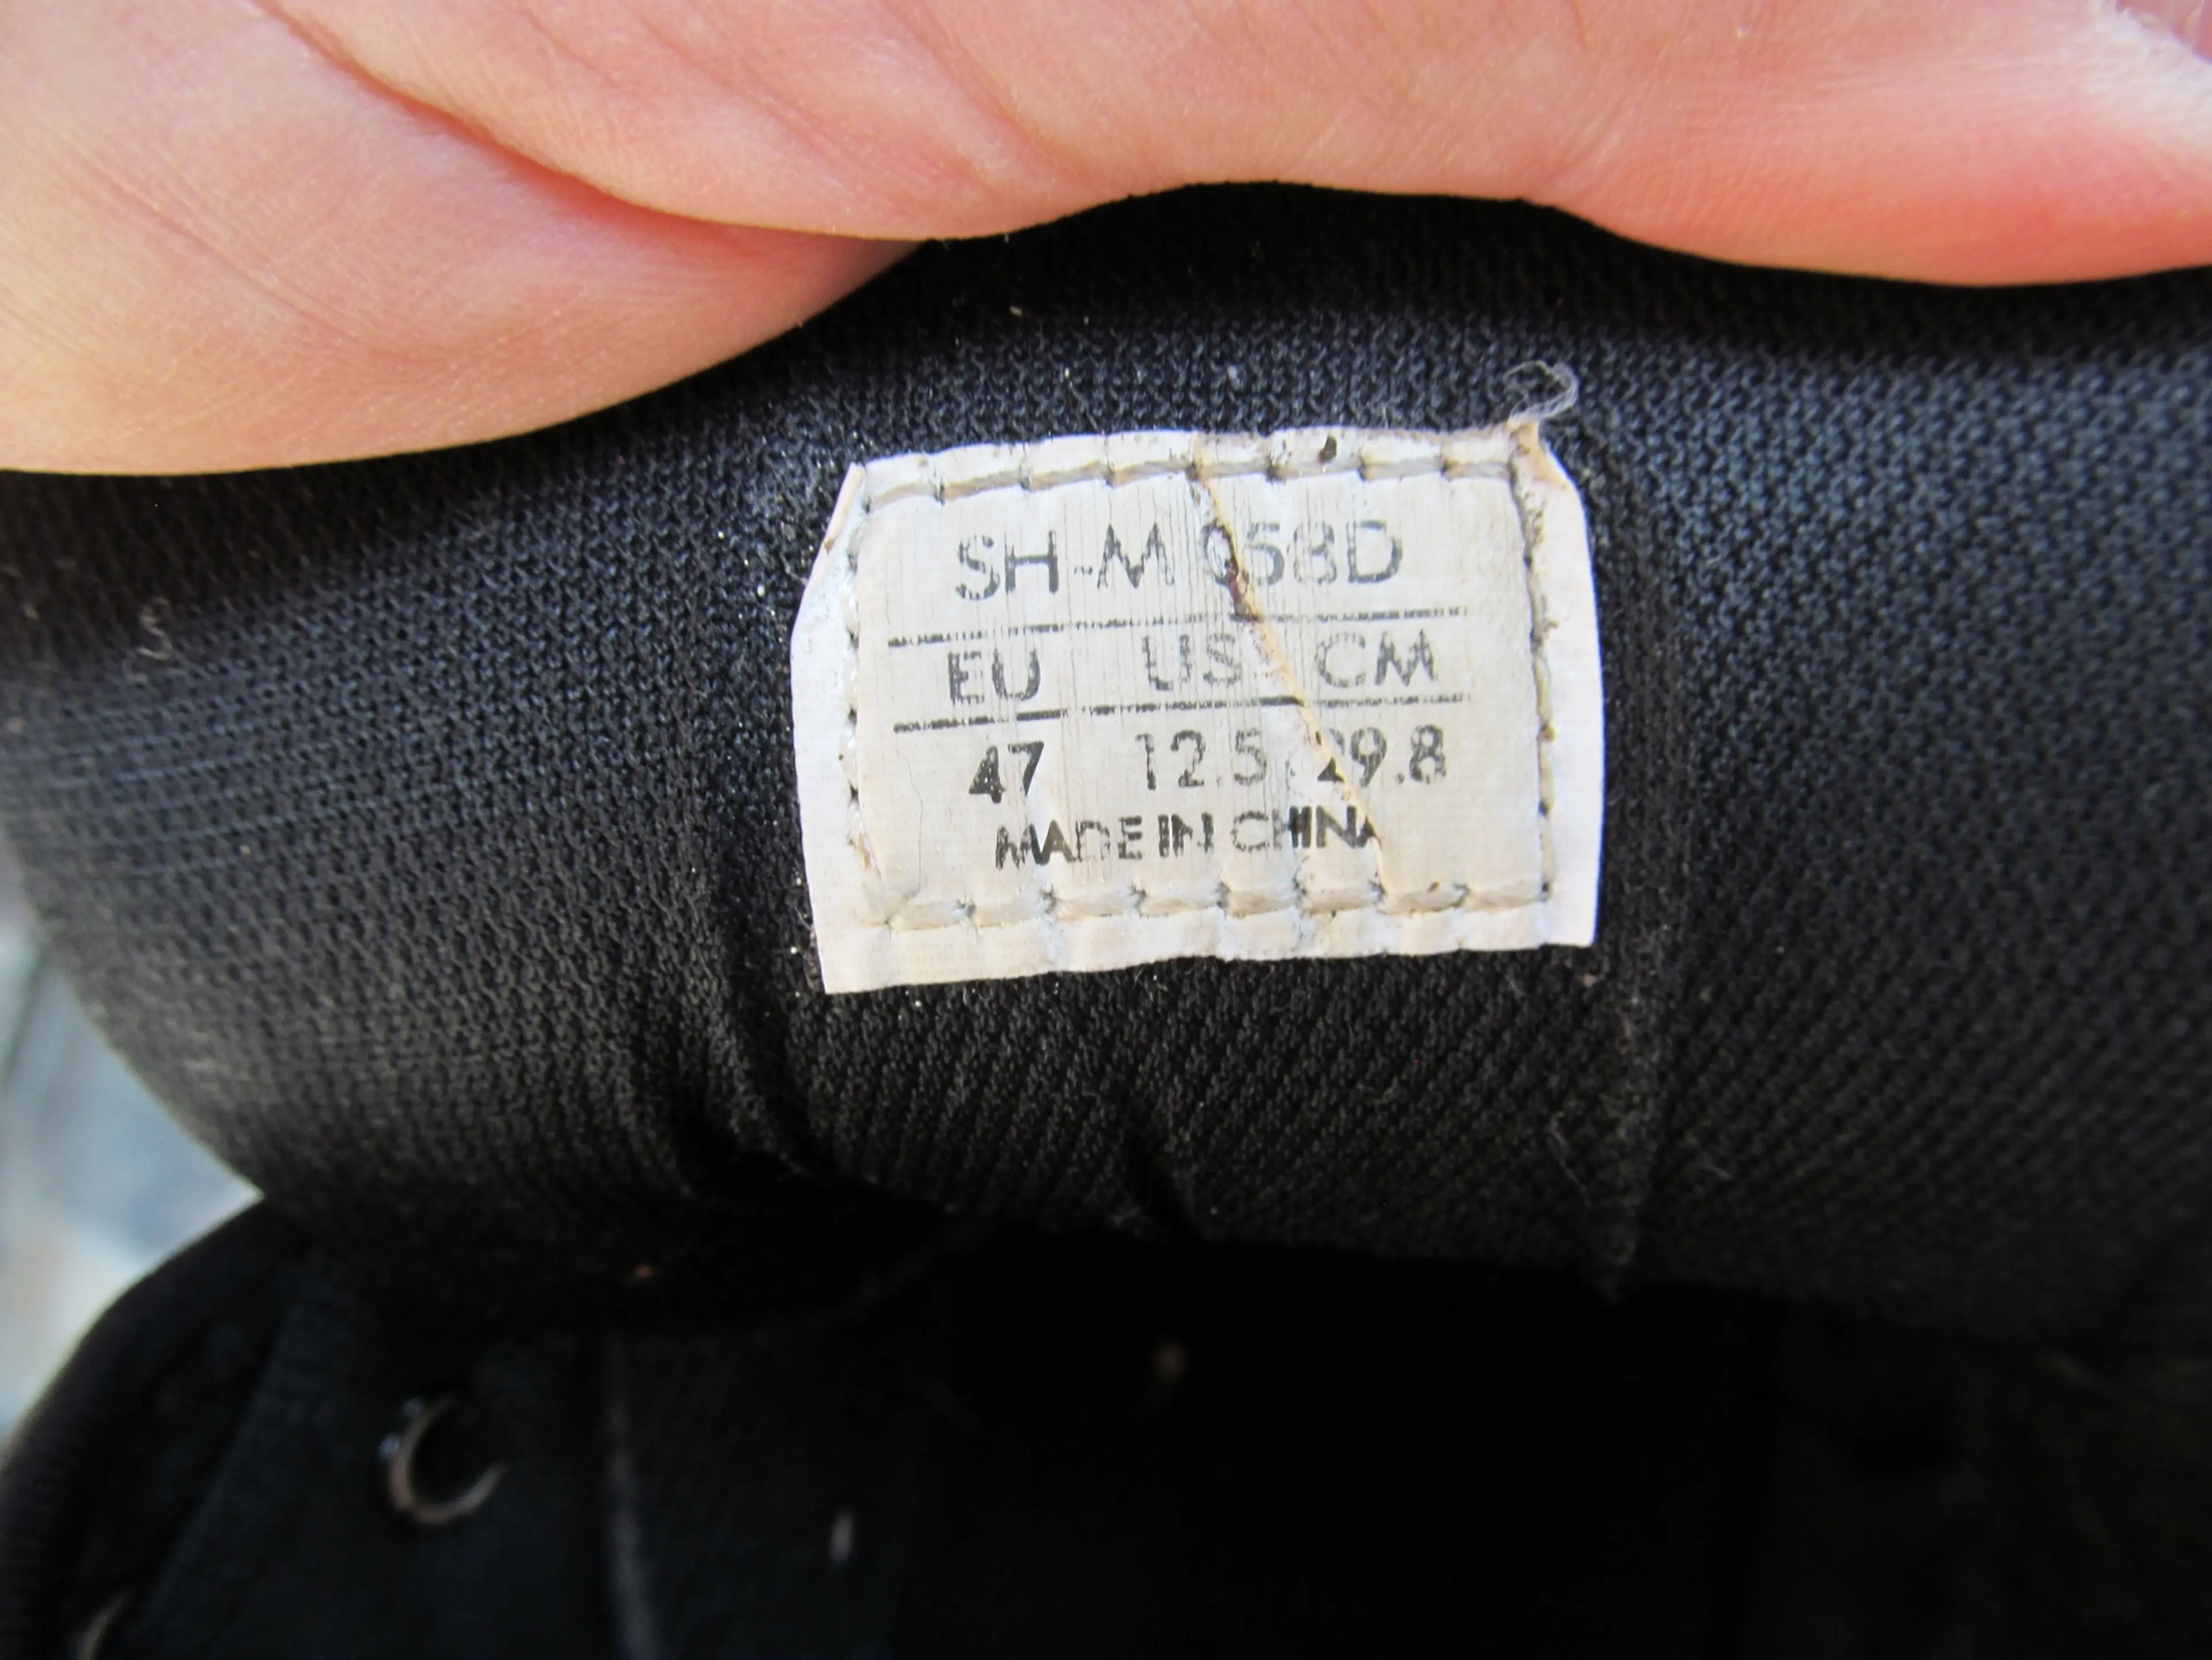 Image Pantofi Shimano SH-M058D nr 47, 29.8 cm